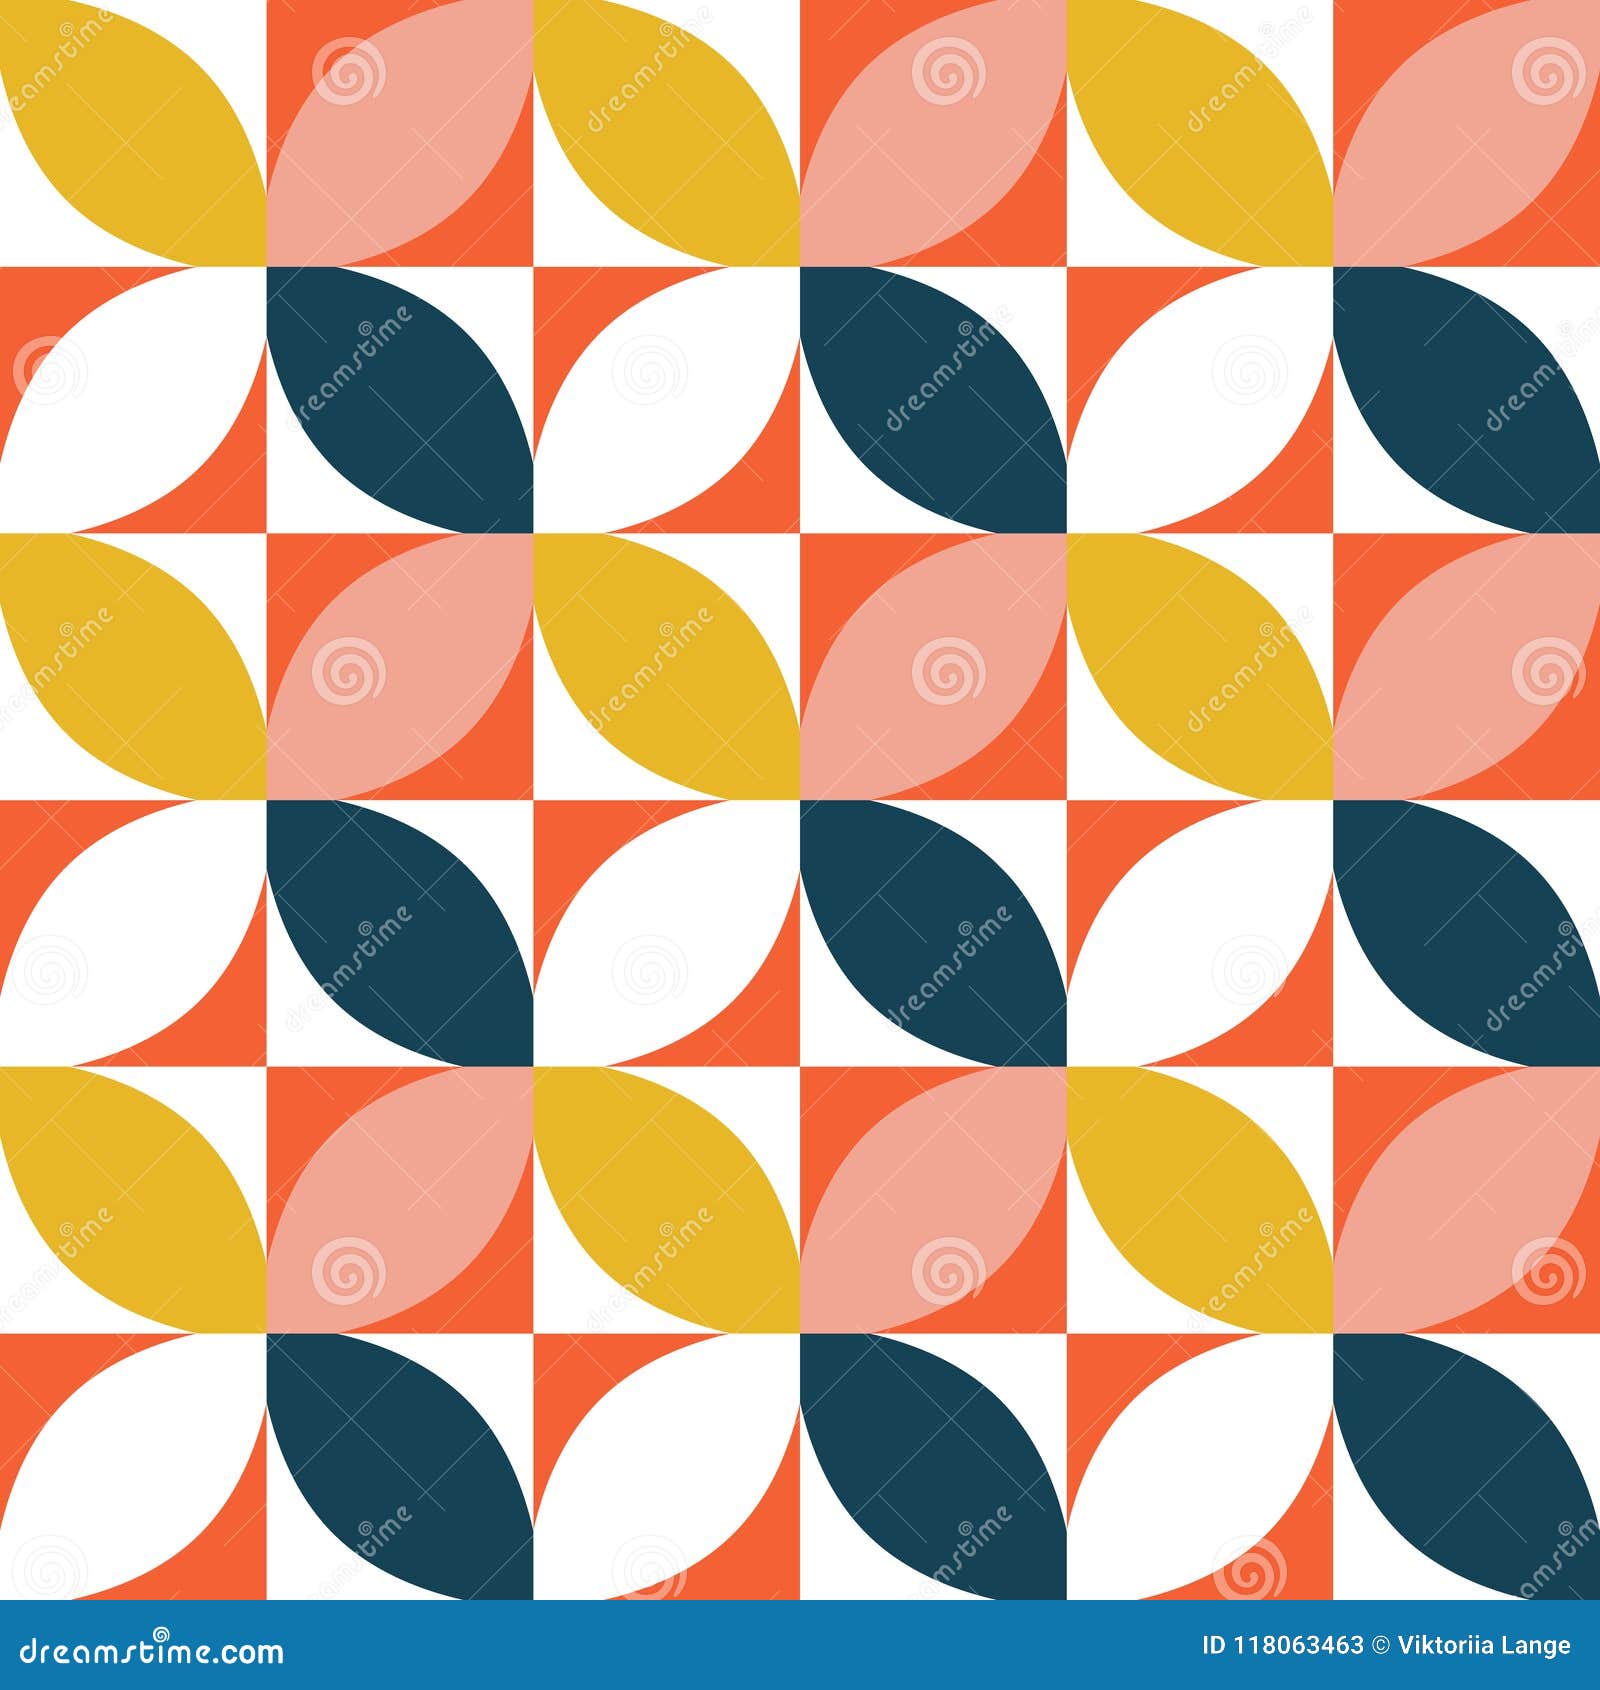 colorful geometric seamless pattern. mid century style.